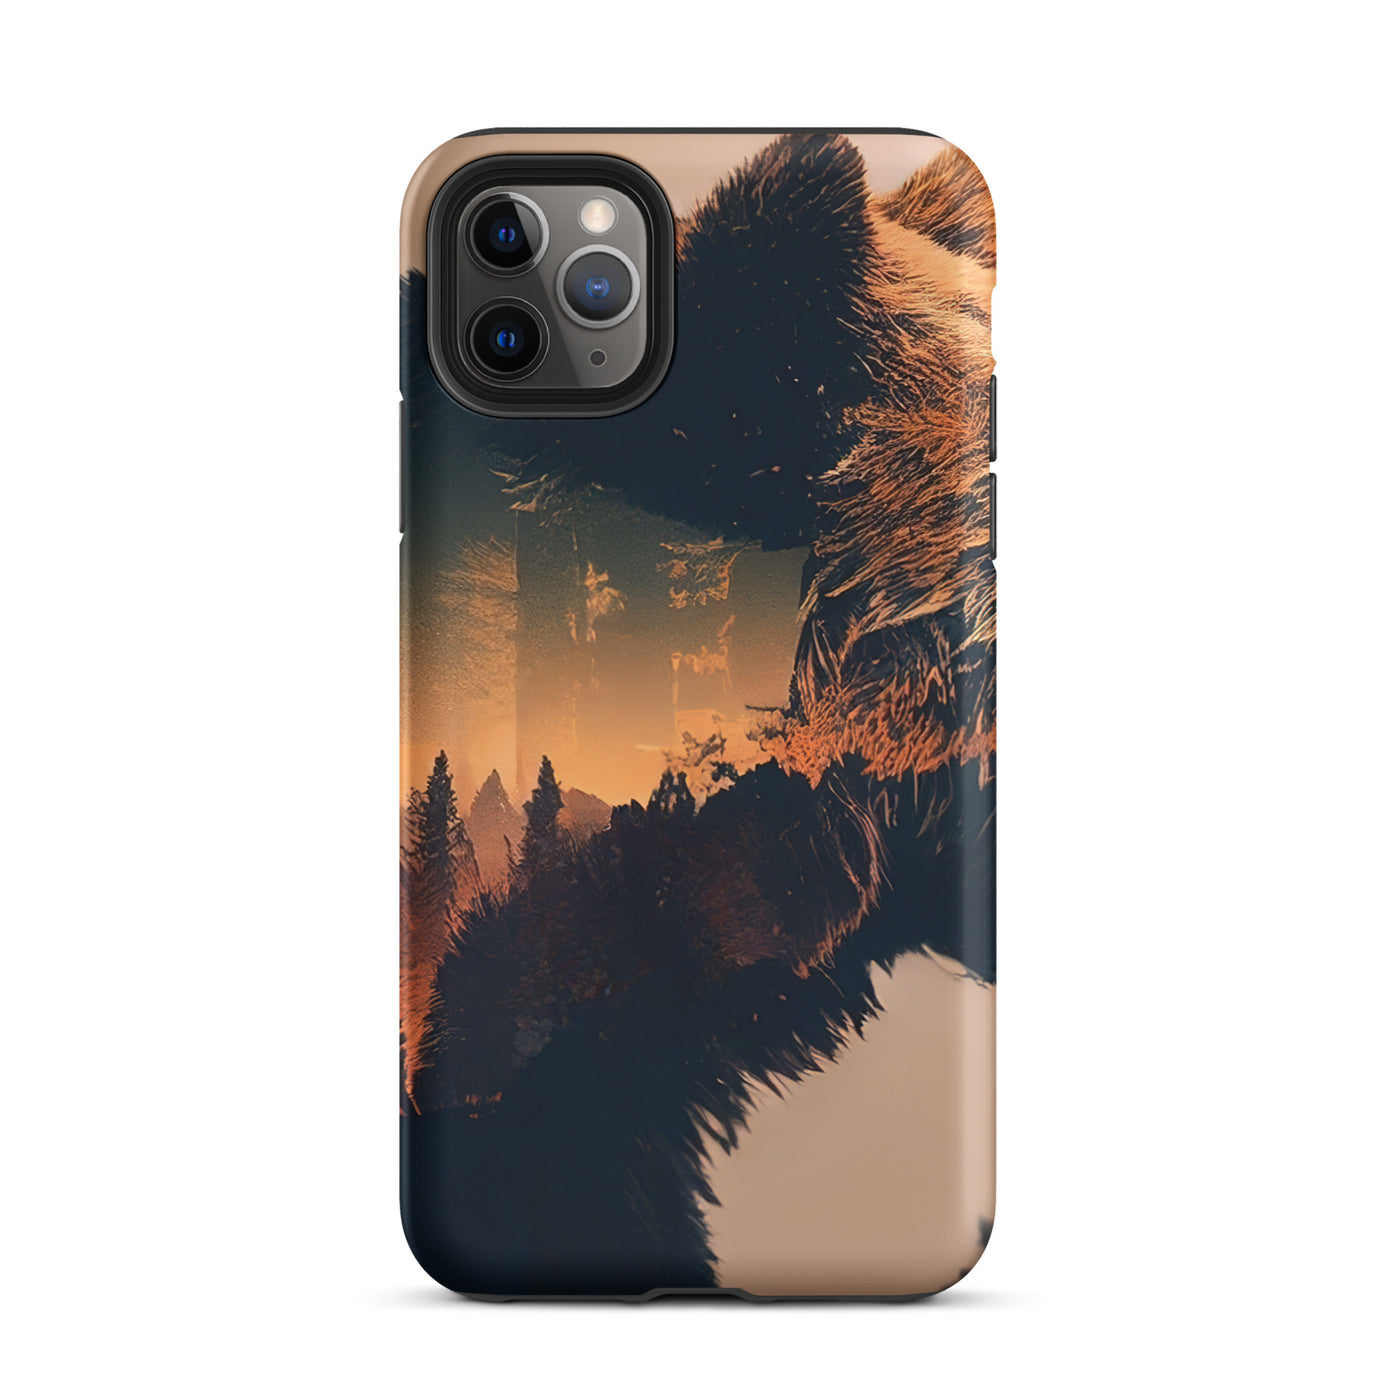 Bär und Bäume Illustration - iPhone Schutzhülle (robust) camping xxx iPhone 11 Pro Max